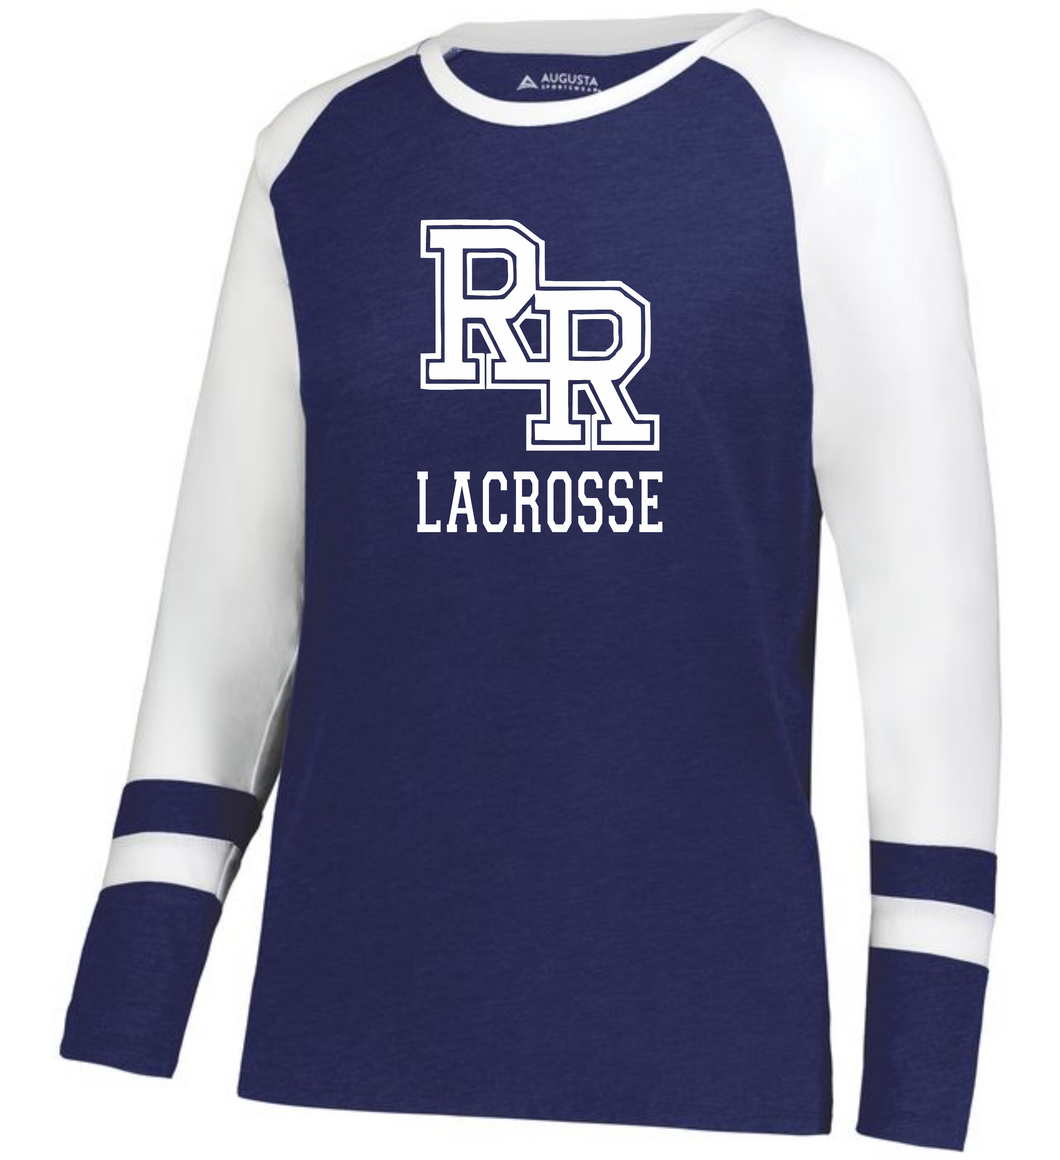 RR-LAX-642-1 - Augusta Ladies Long Sleeve Fanatic Tee - RR Lacrosse Logo